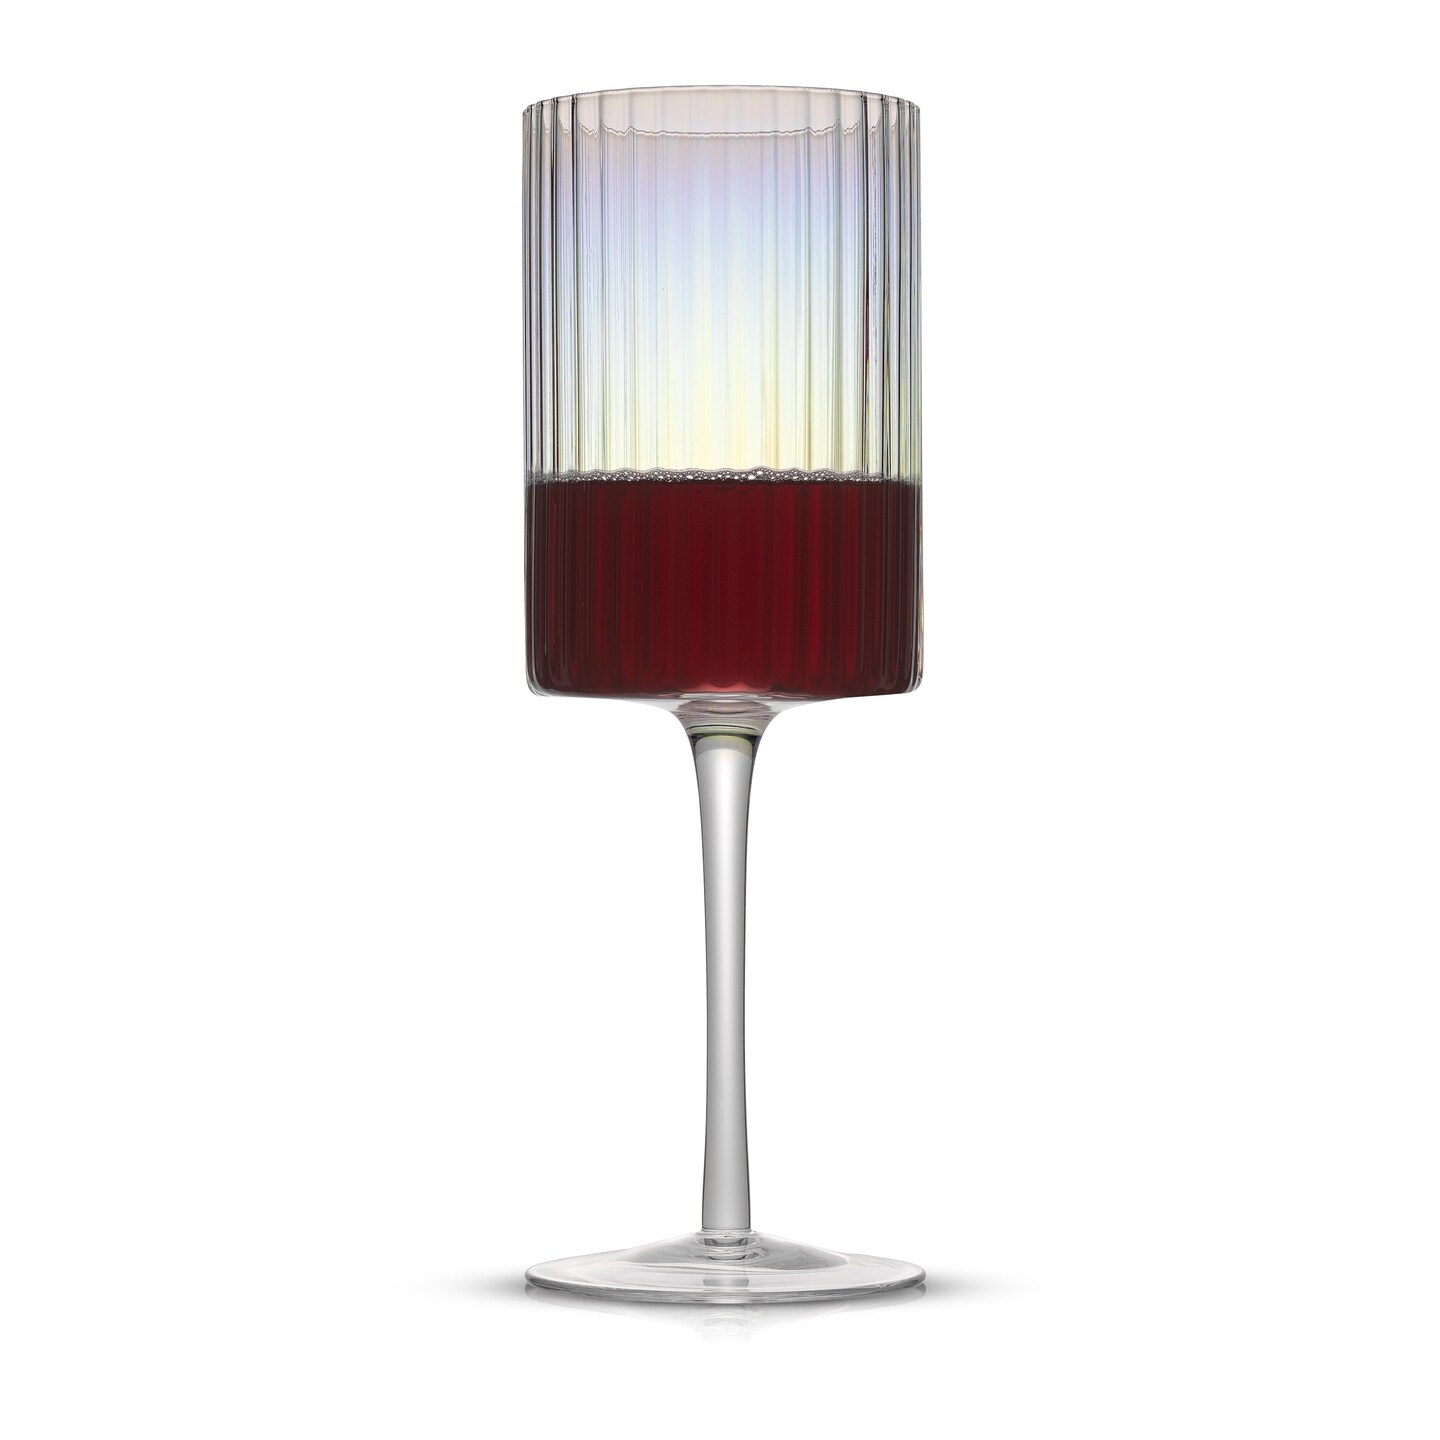 JoyJolt Christian Siriano Chroma Iridescent Red Wine Glass - 17.5 oz - Set of 2